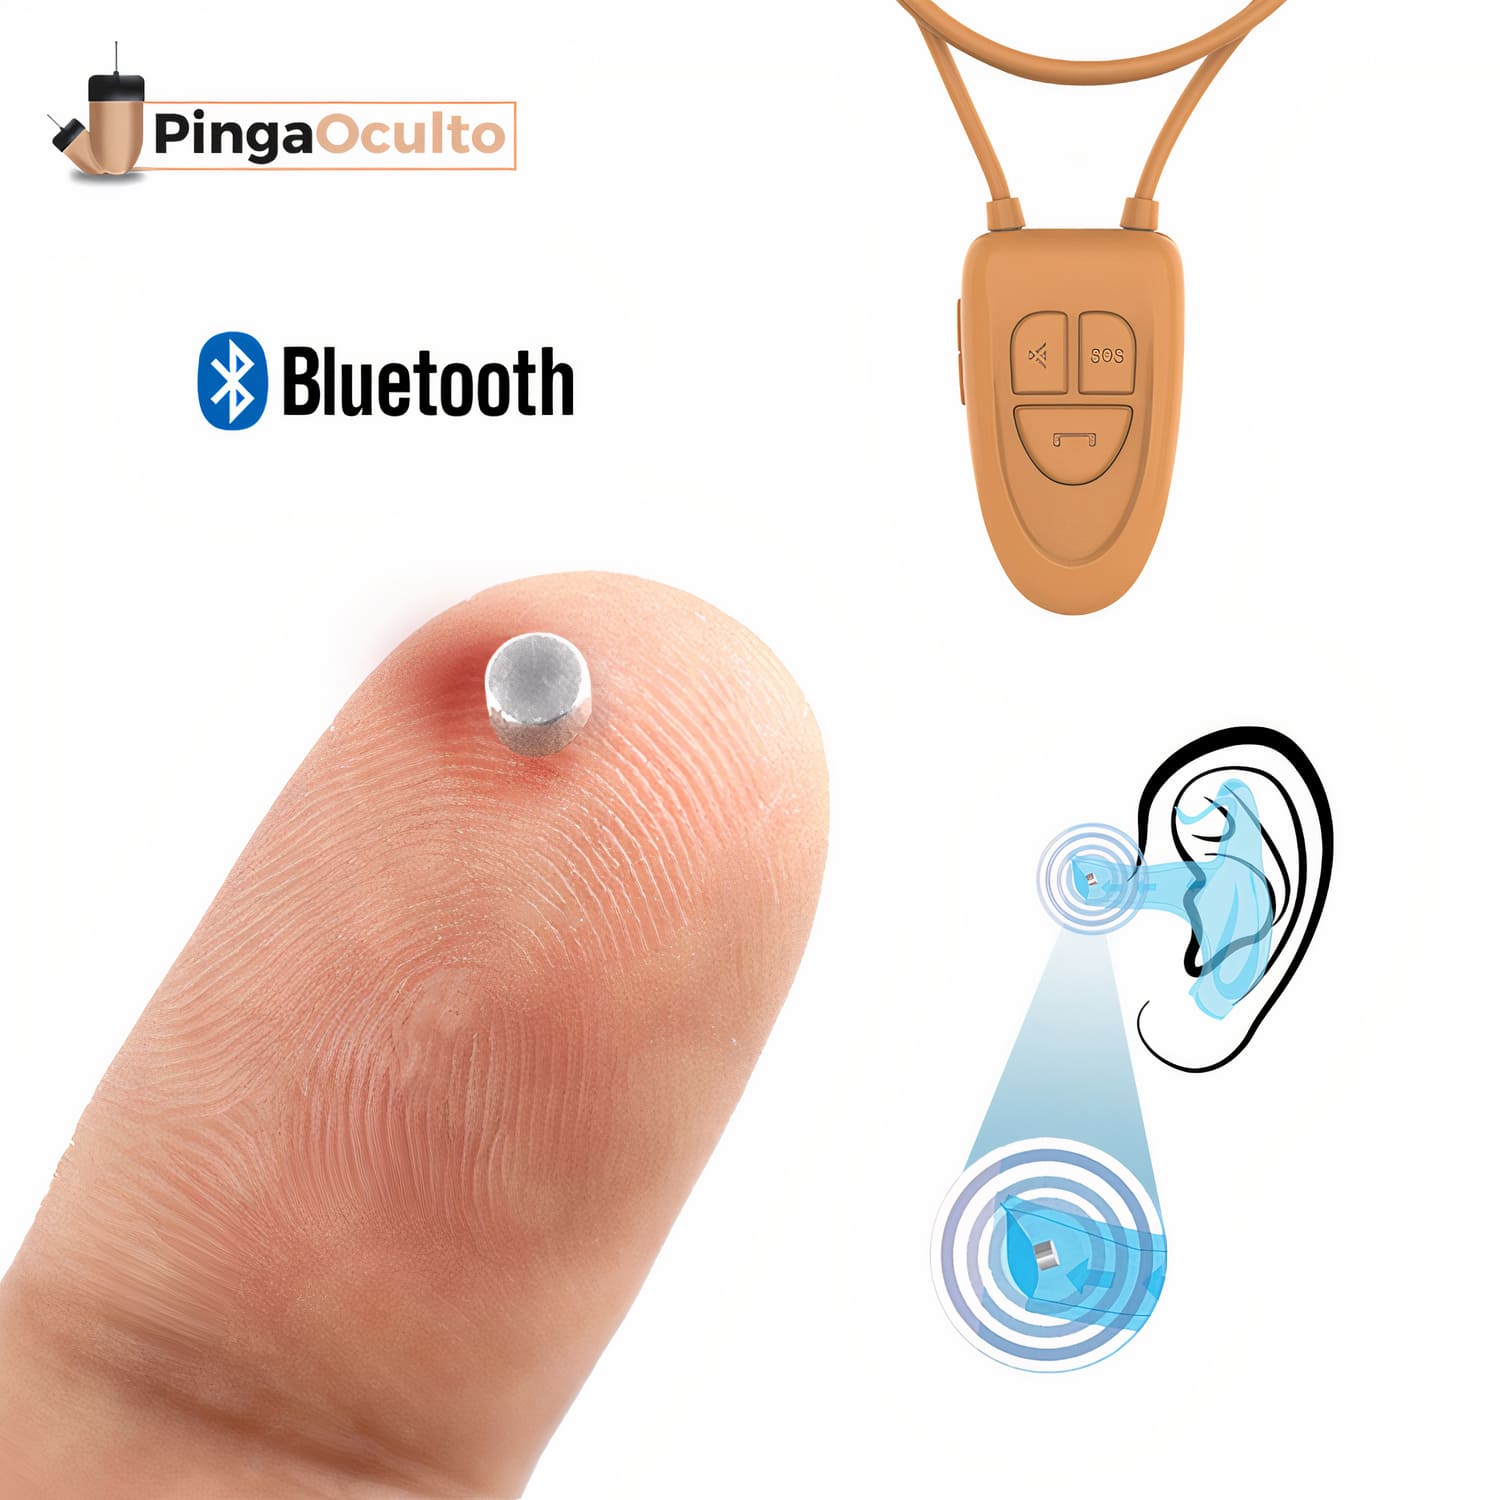 Vip Pro UltraMini Bluetooth earpiece - PingaOculto ®